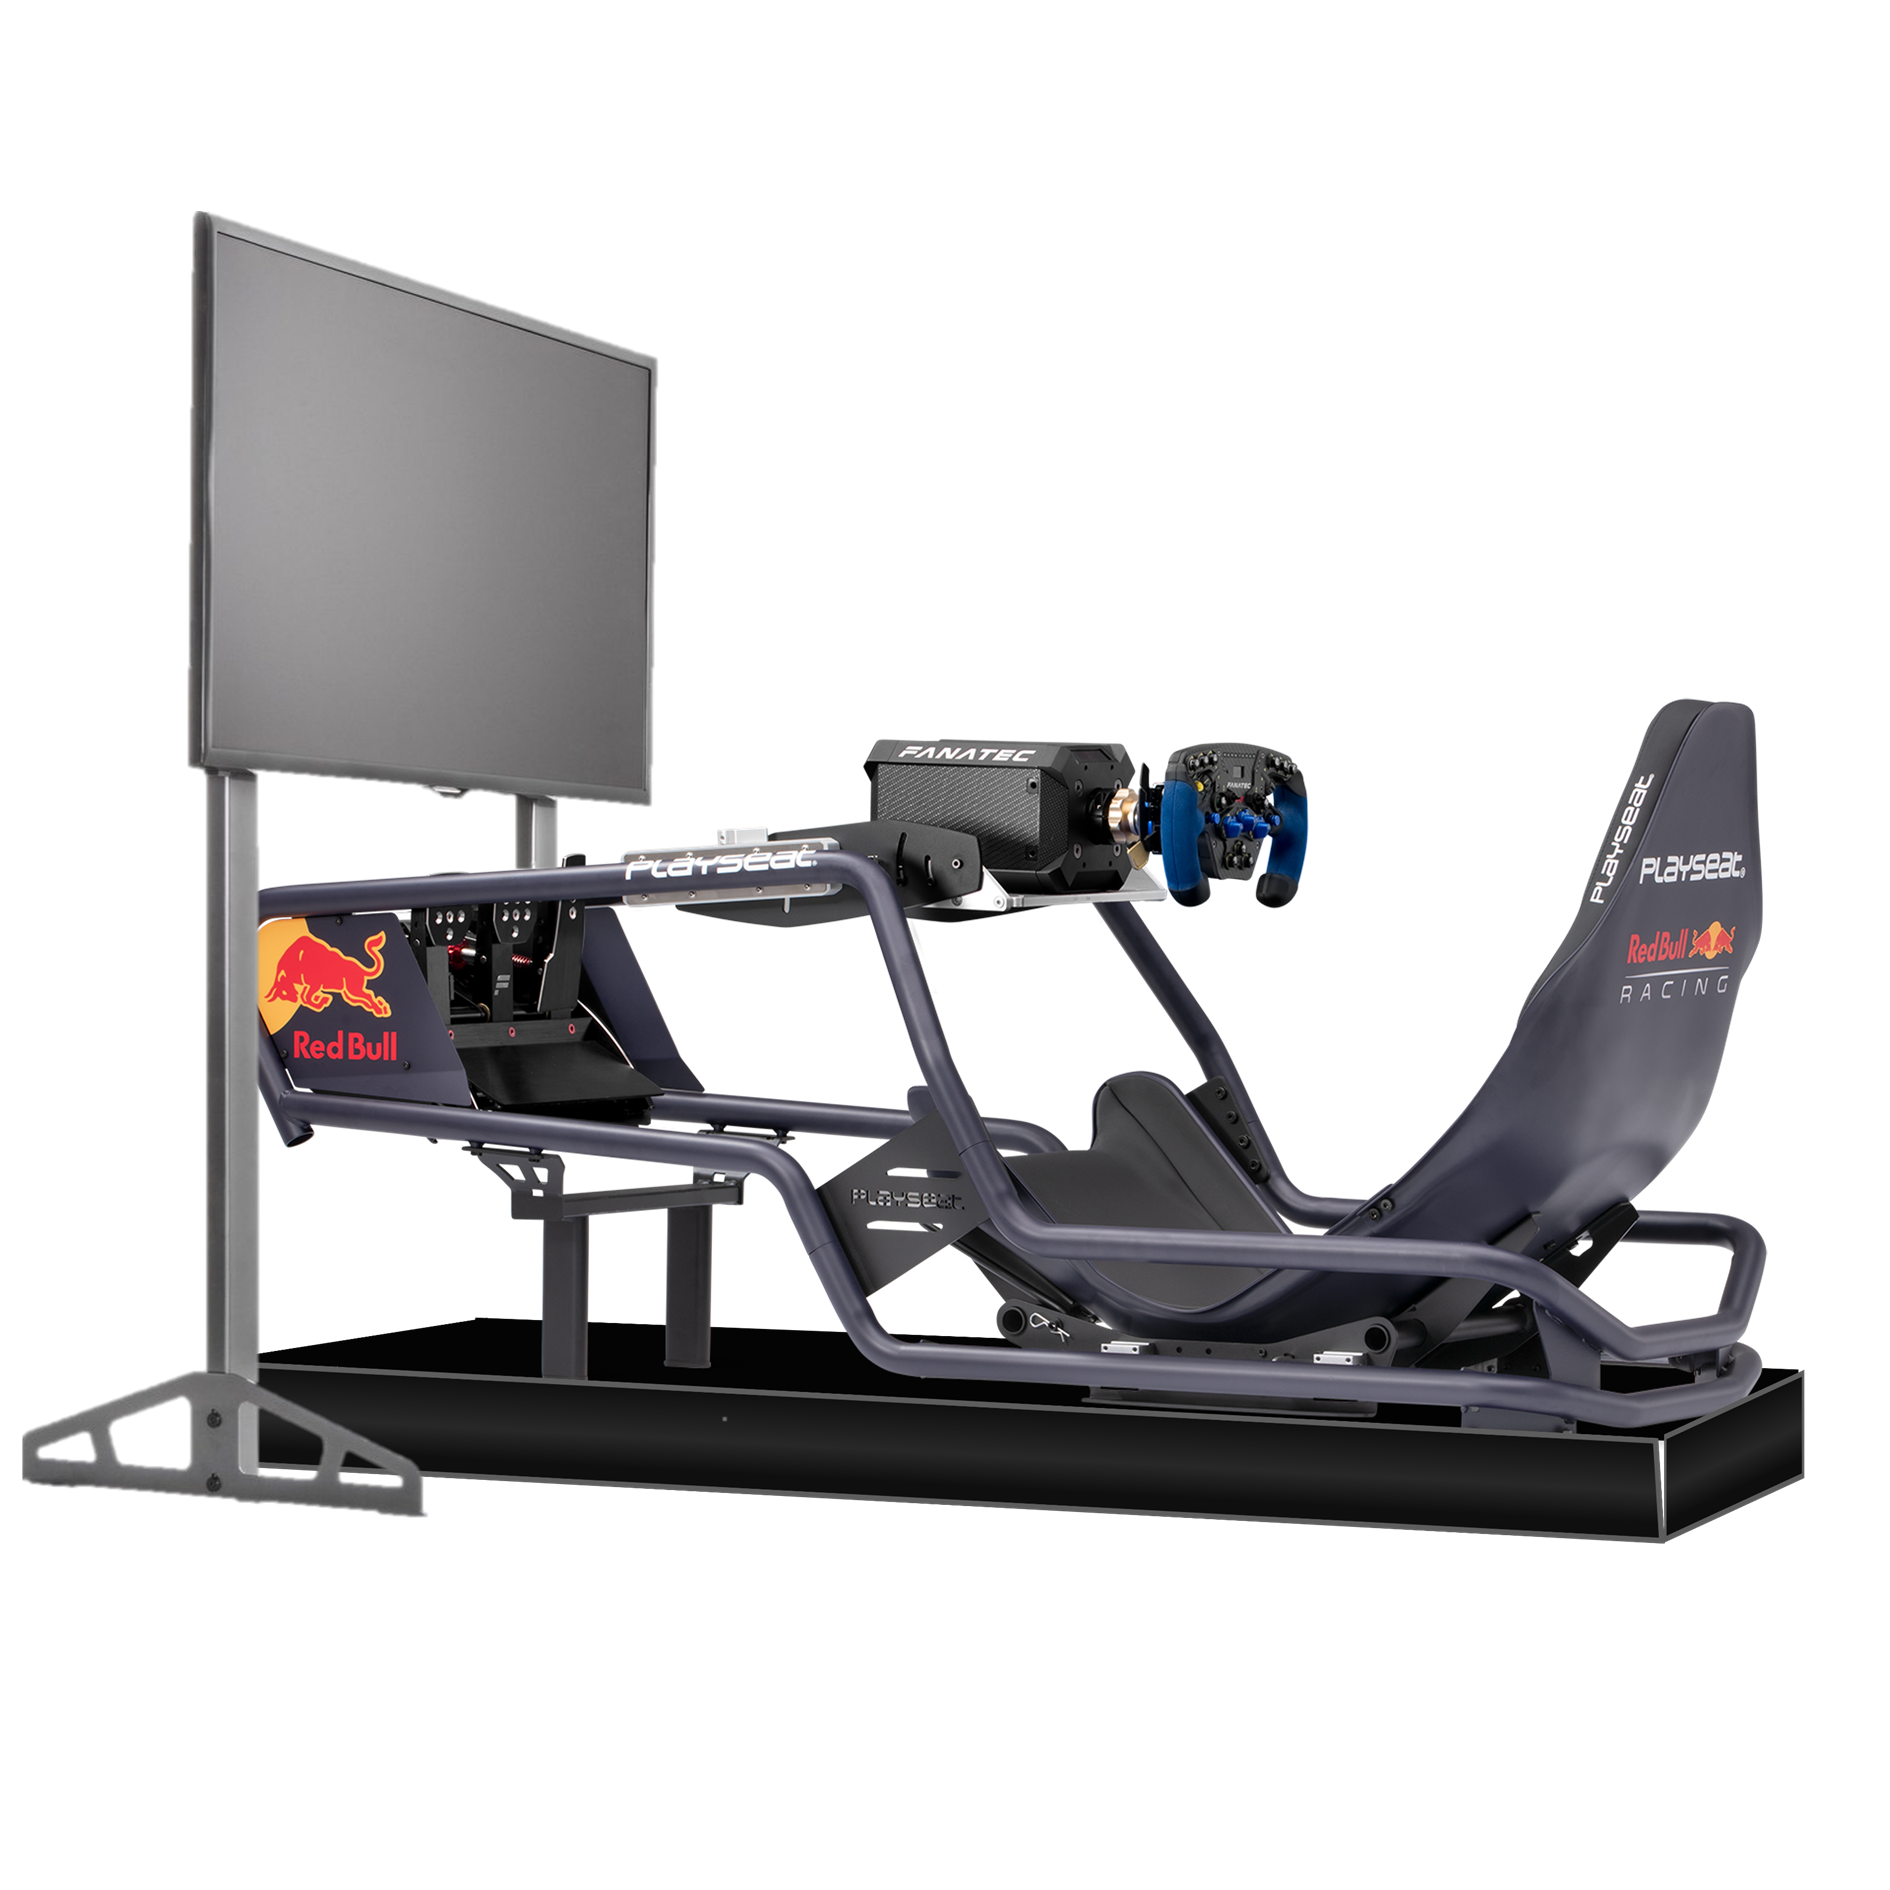 Red Bull Racing Pro F1™ simulator